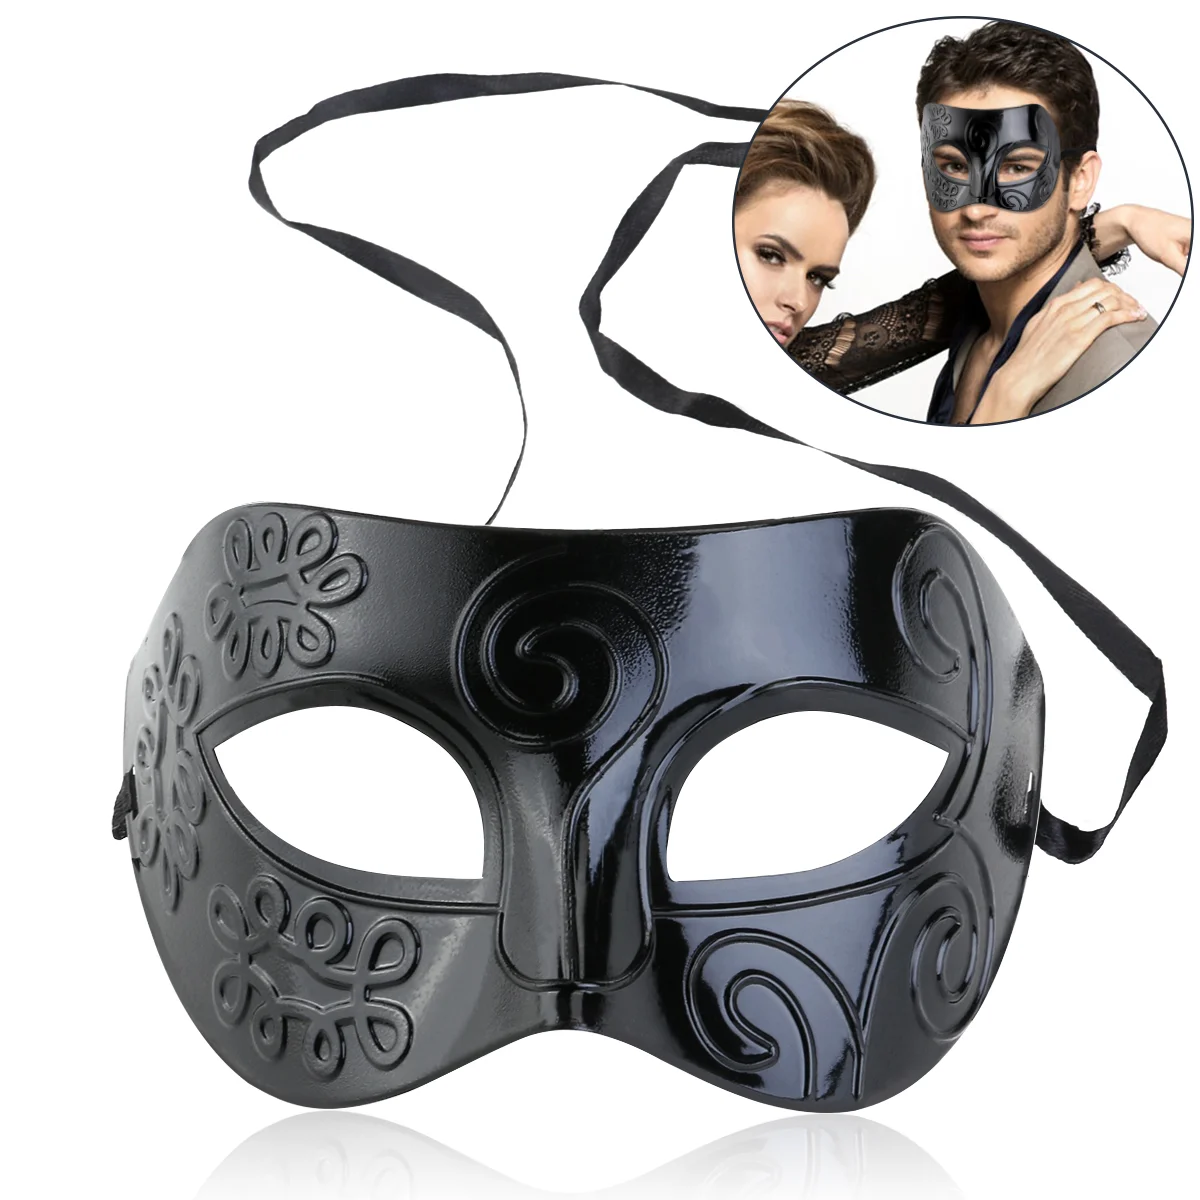 

WINOMO Half Face Masquerade Mask Venetian Mysterious Costume Engraving Cosplay Accessory for Masquerade Ball Party